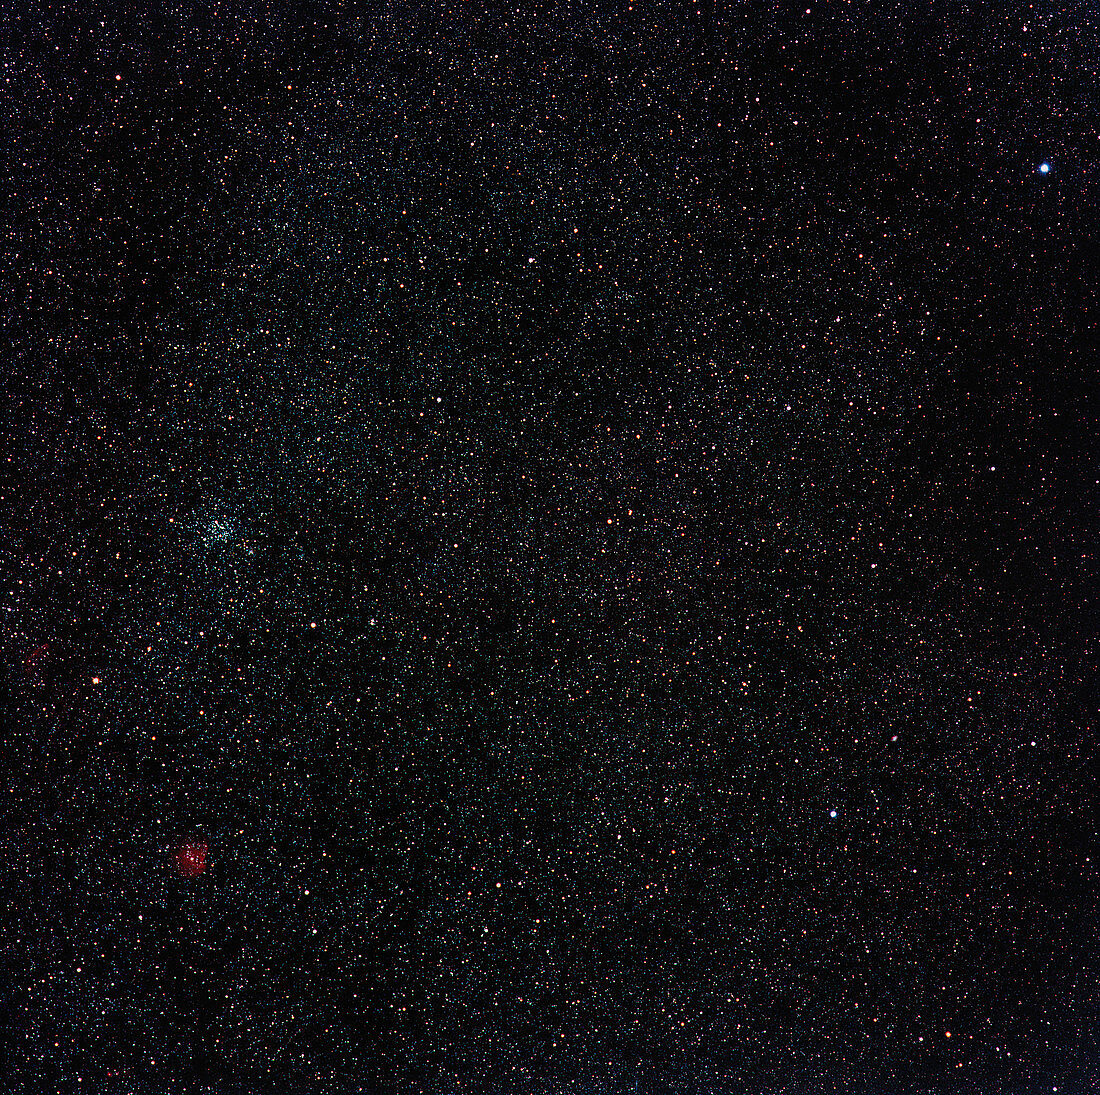 Star cluster M35